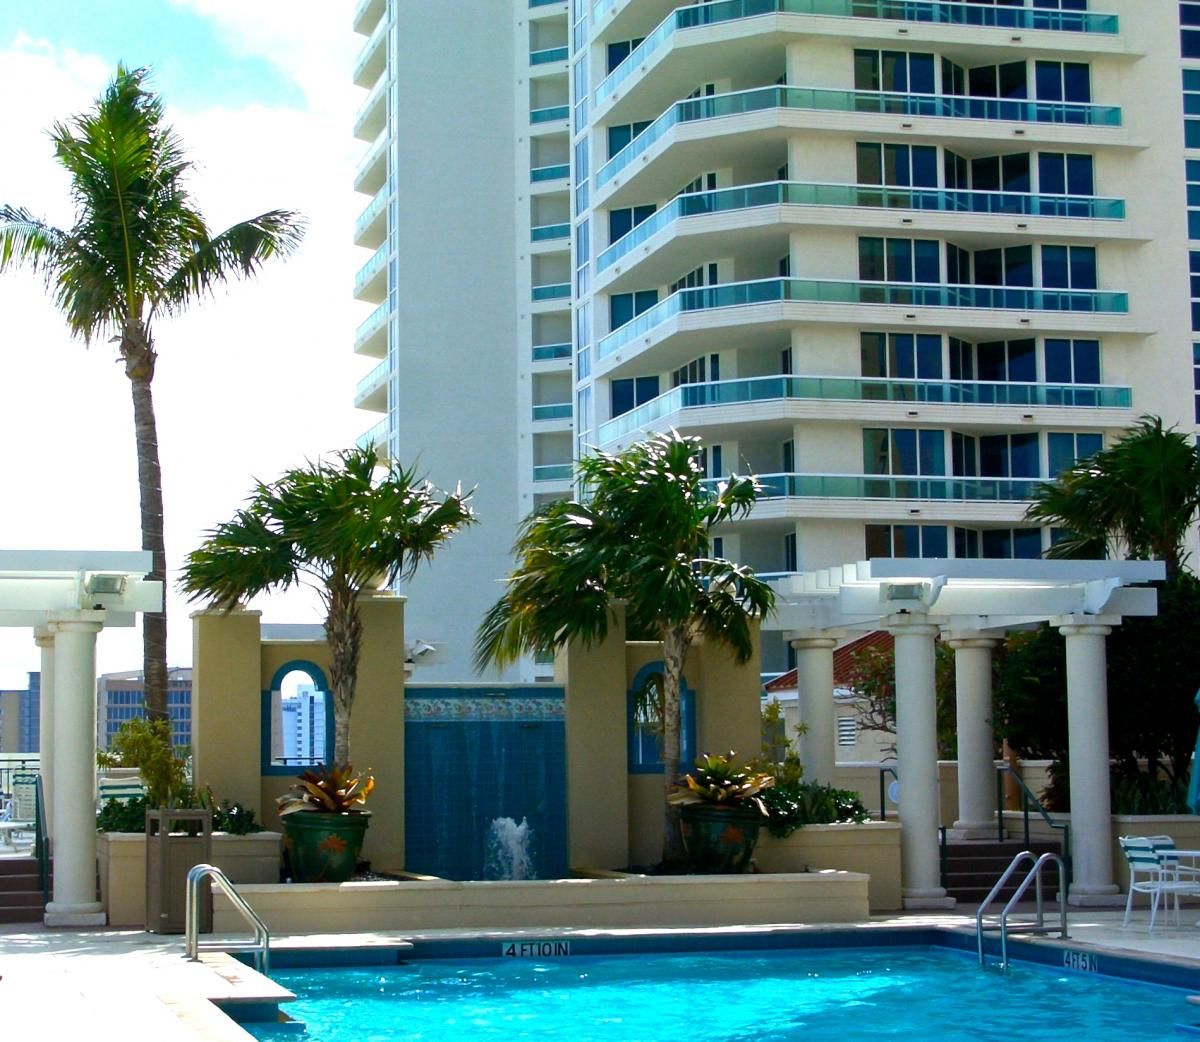 Top 10 Marriott Villas in Florida